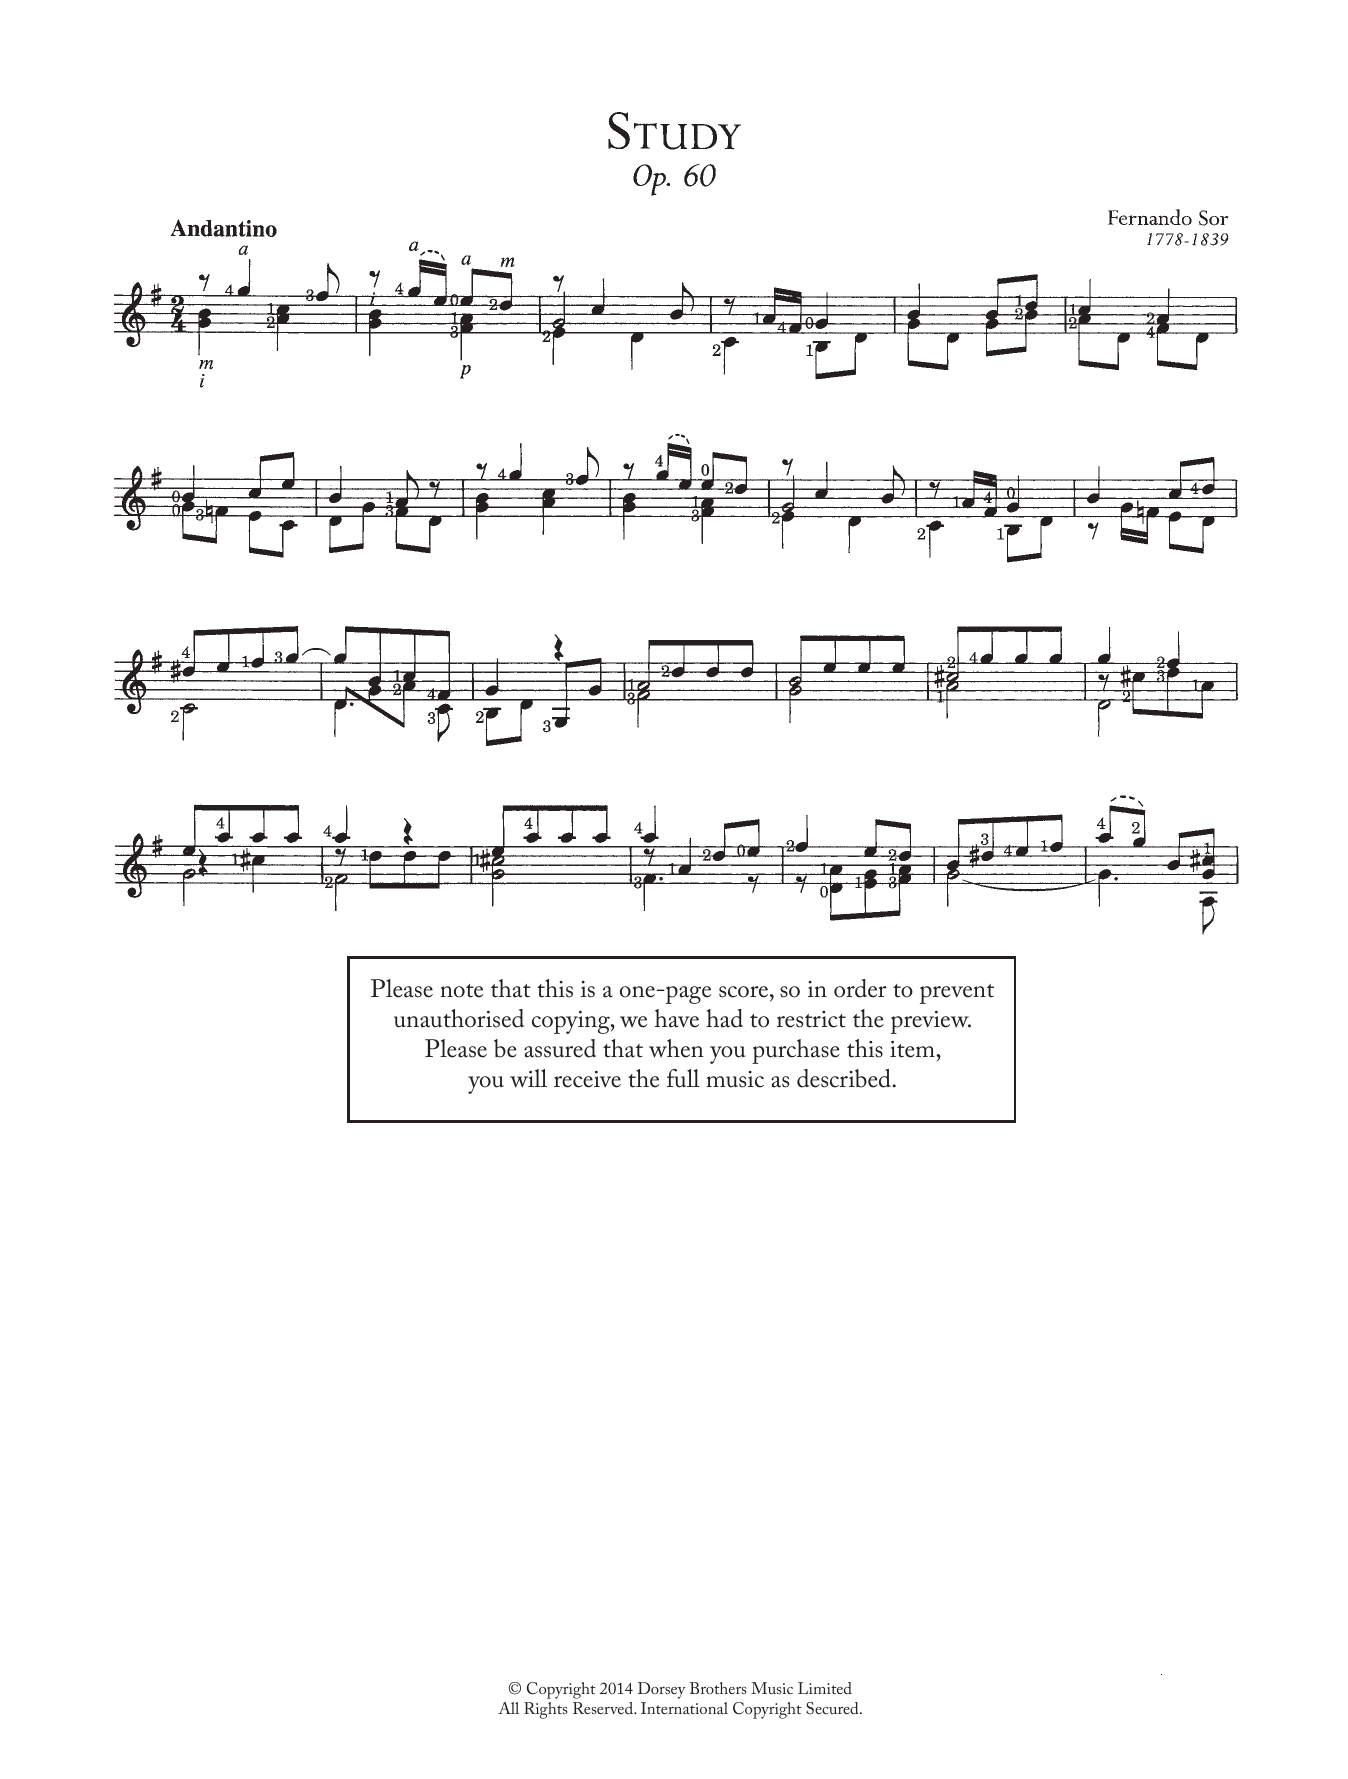 Fernando Sor Study, Op.60, No.16 sheet music notes and chords arranged for Easy Guitar